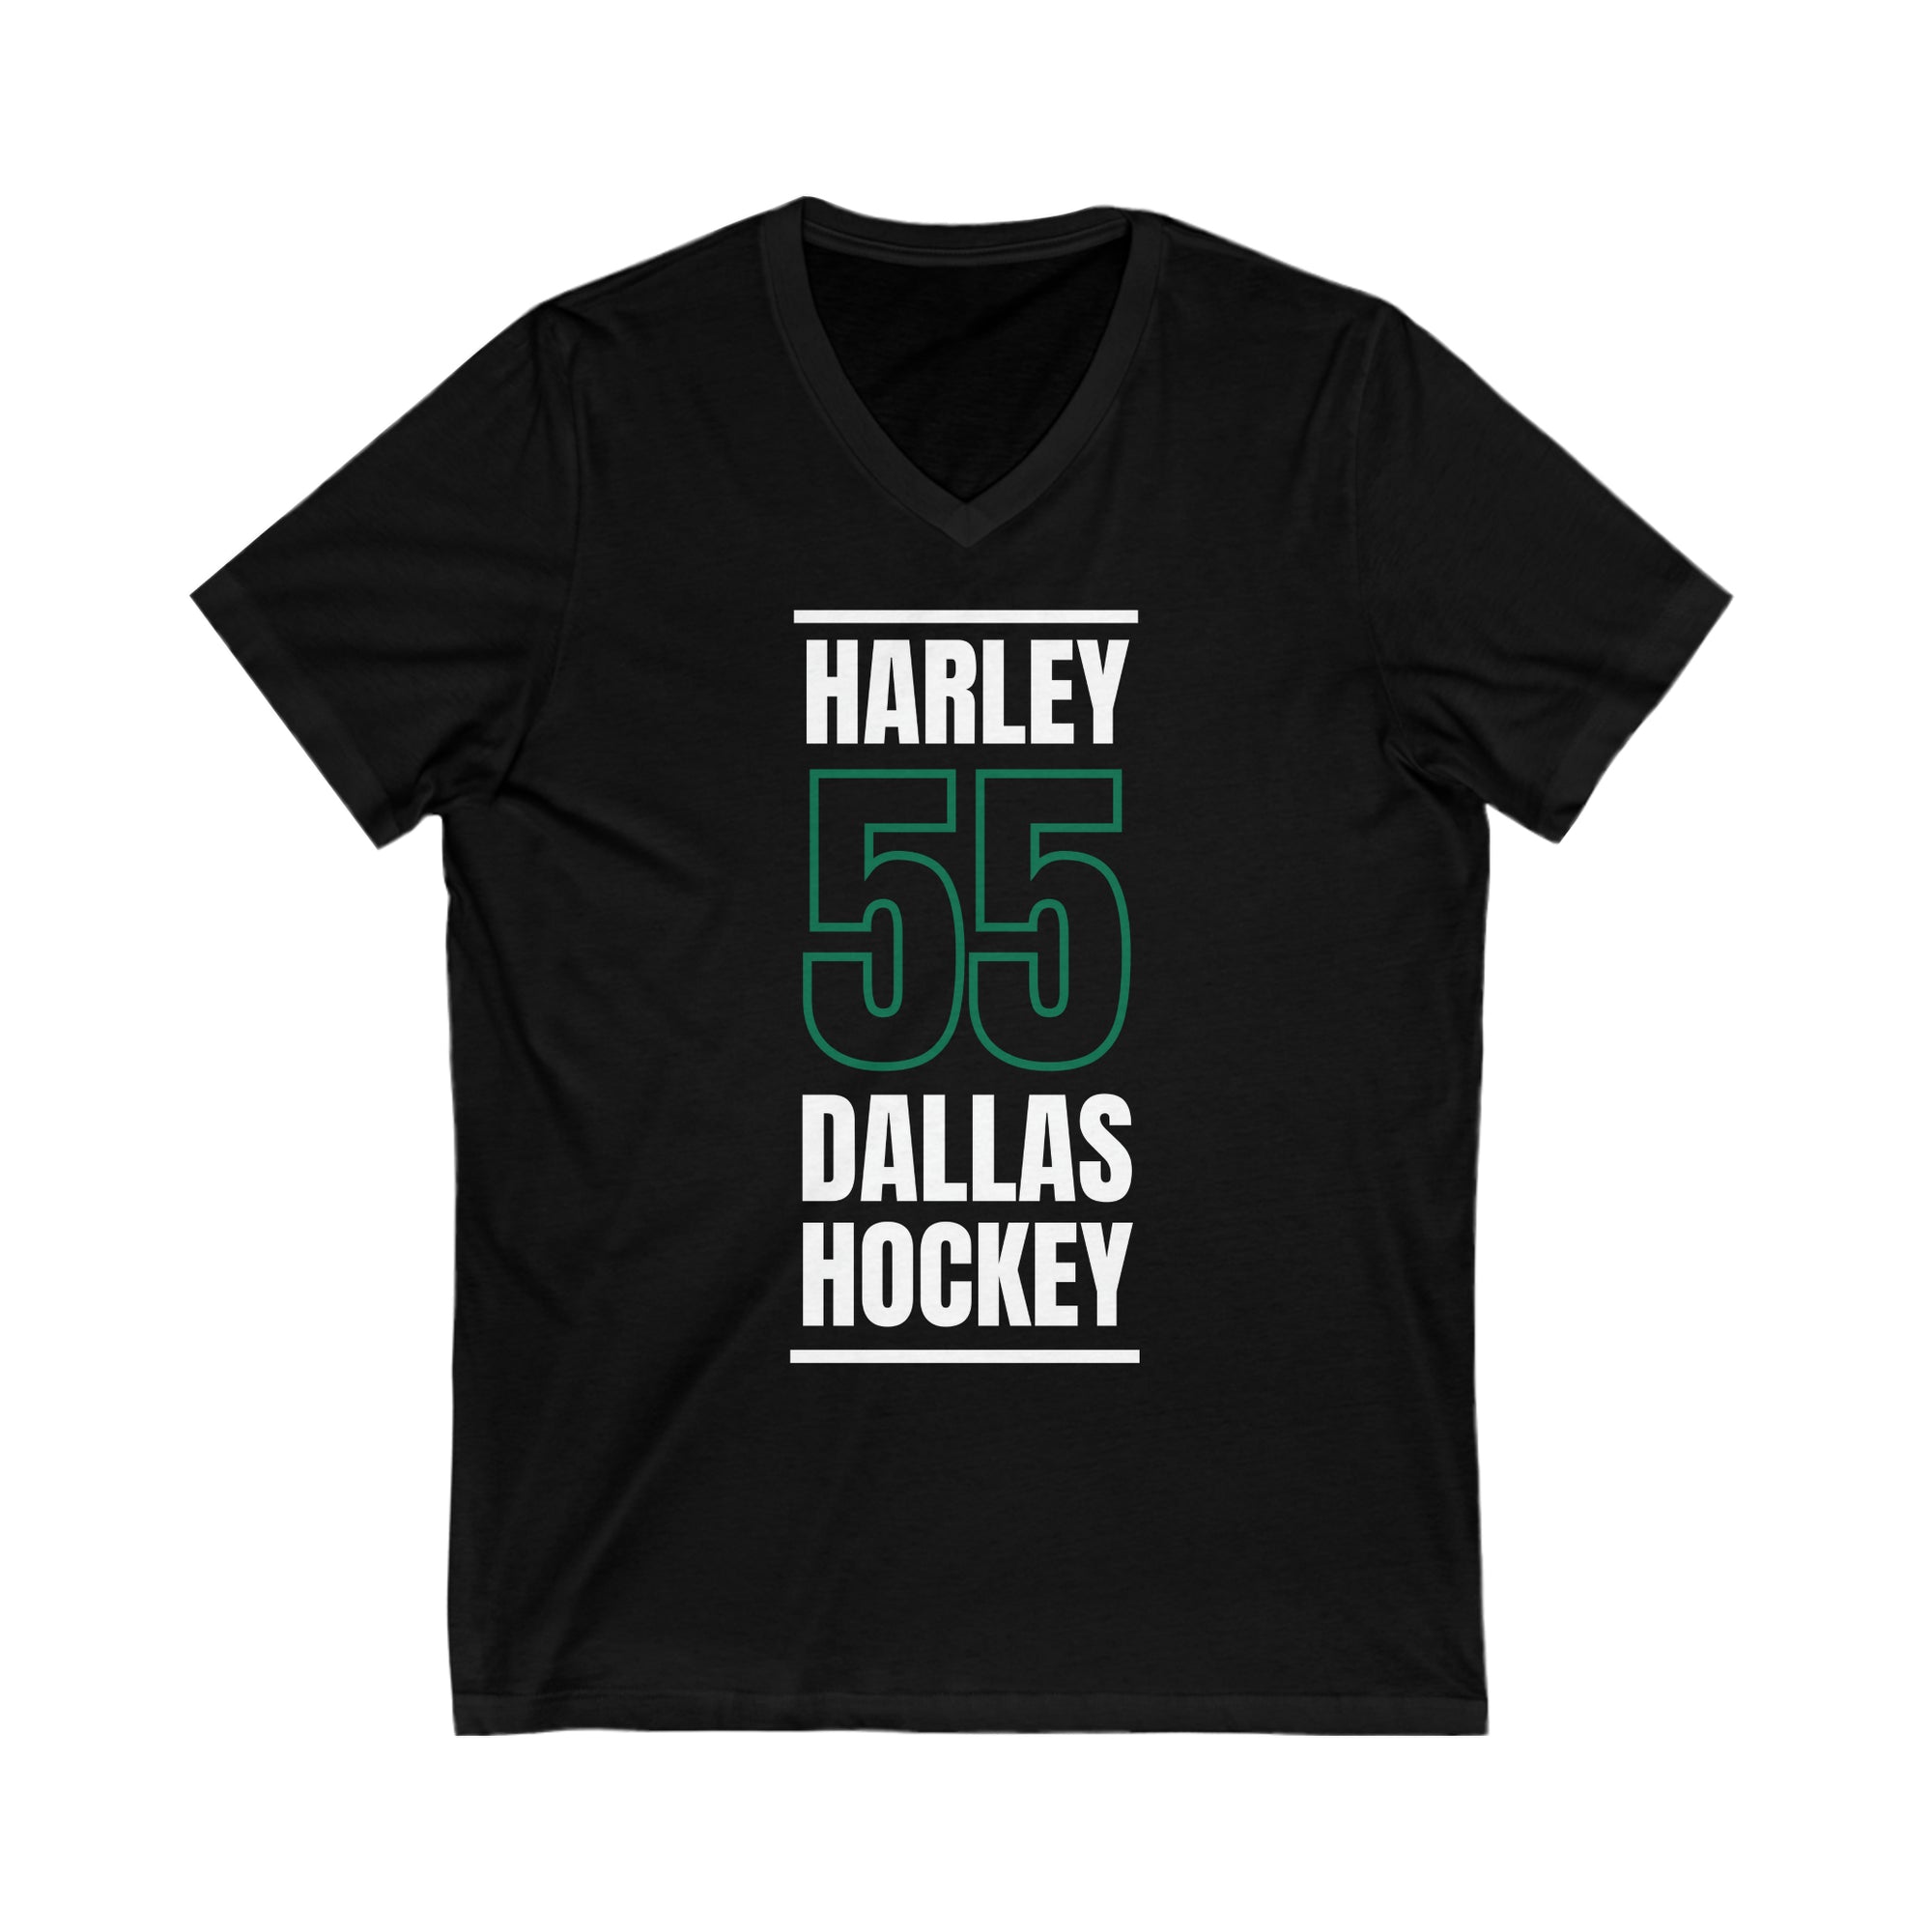 Harley 55 Dallas Hockey Black Vertical Design Unisex V-Neck Tee